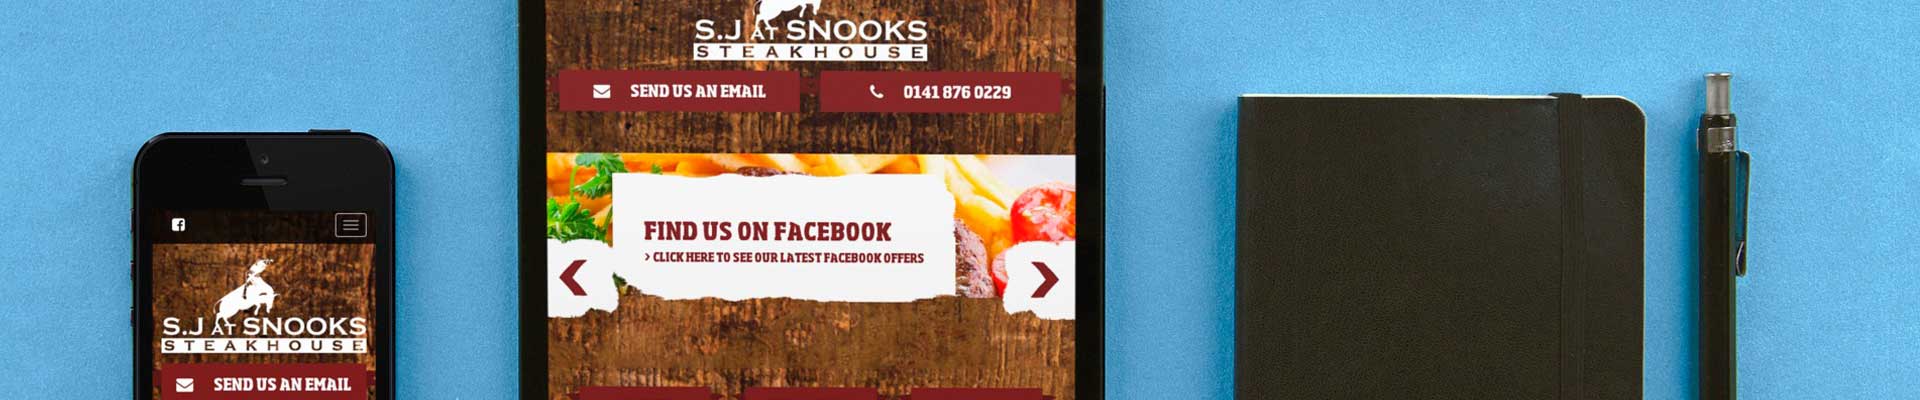 Snooks Steakhouse